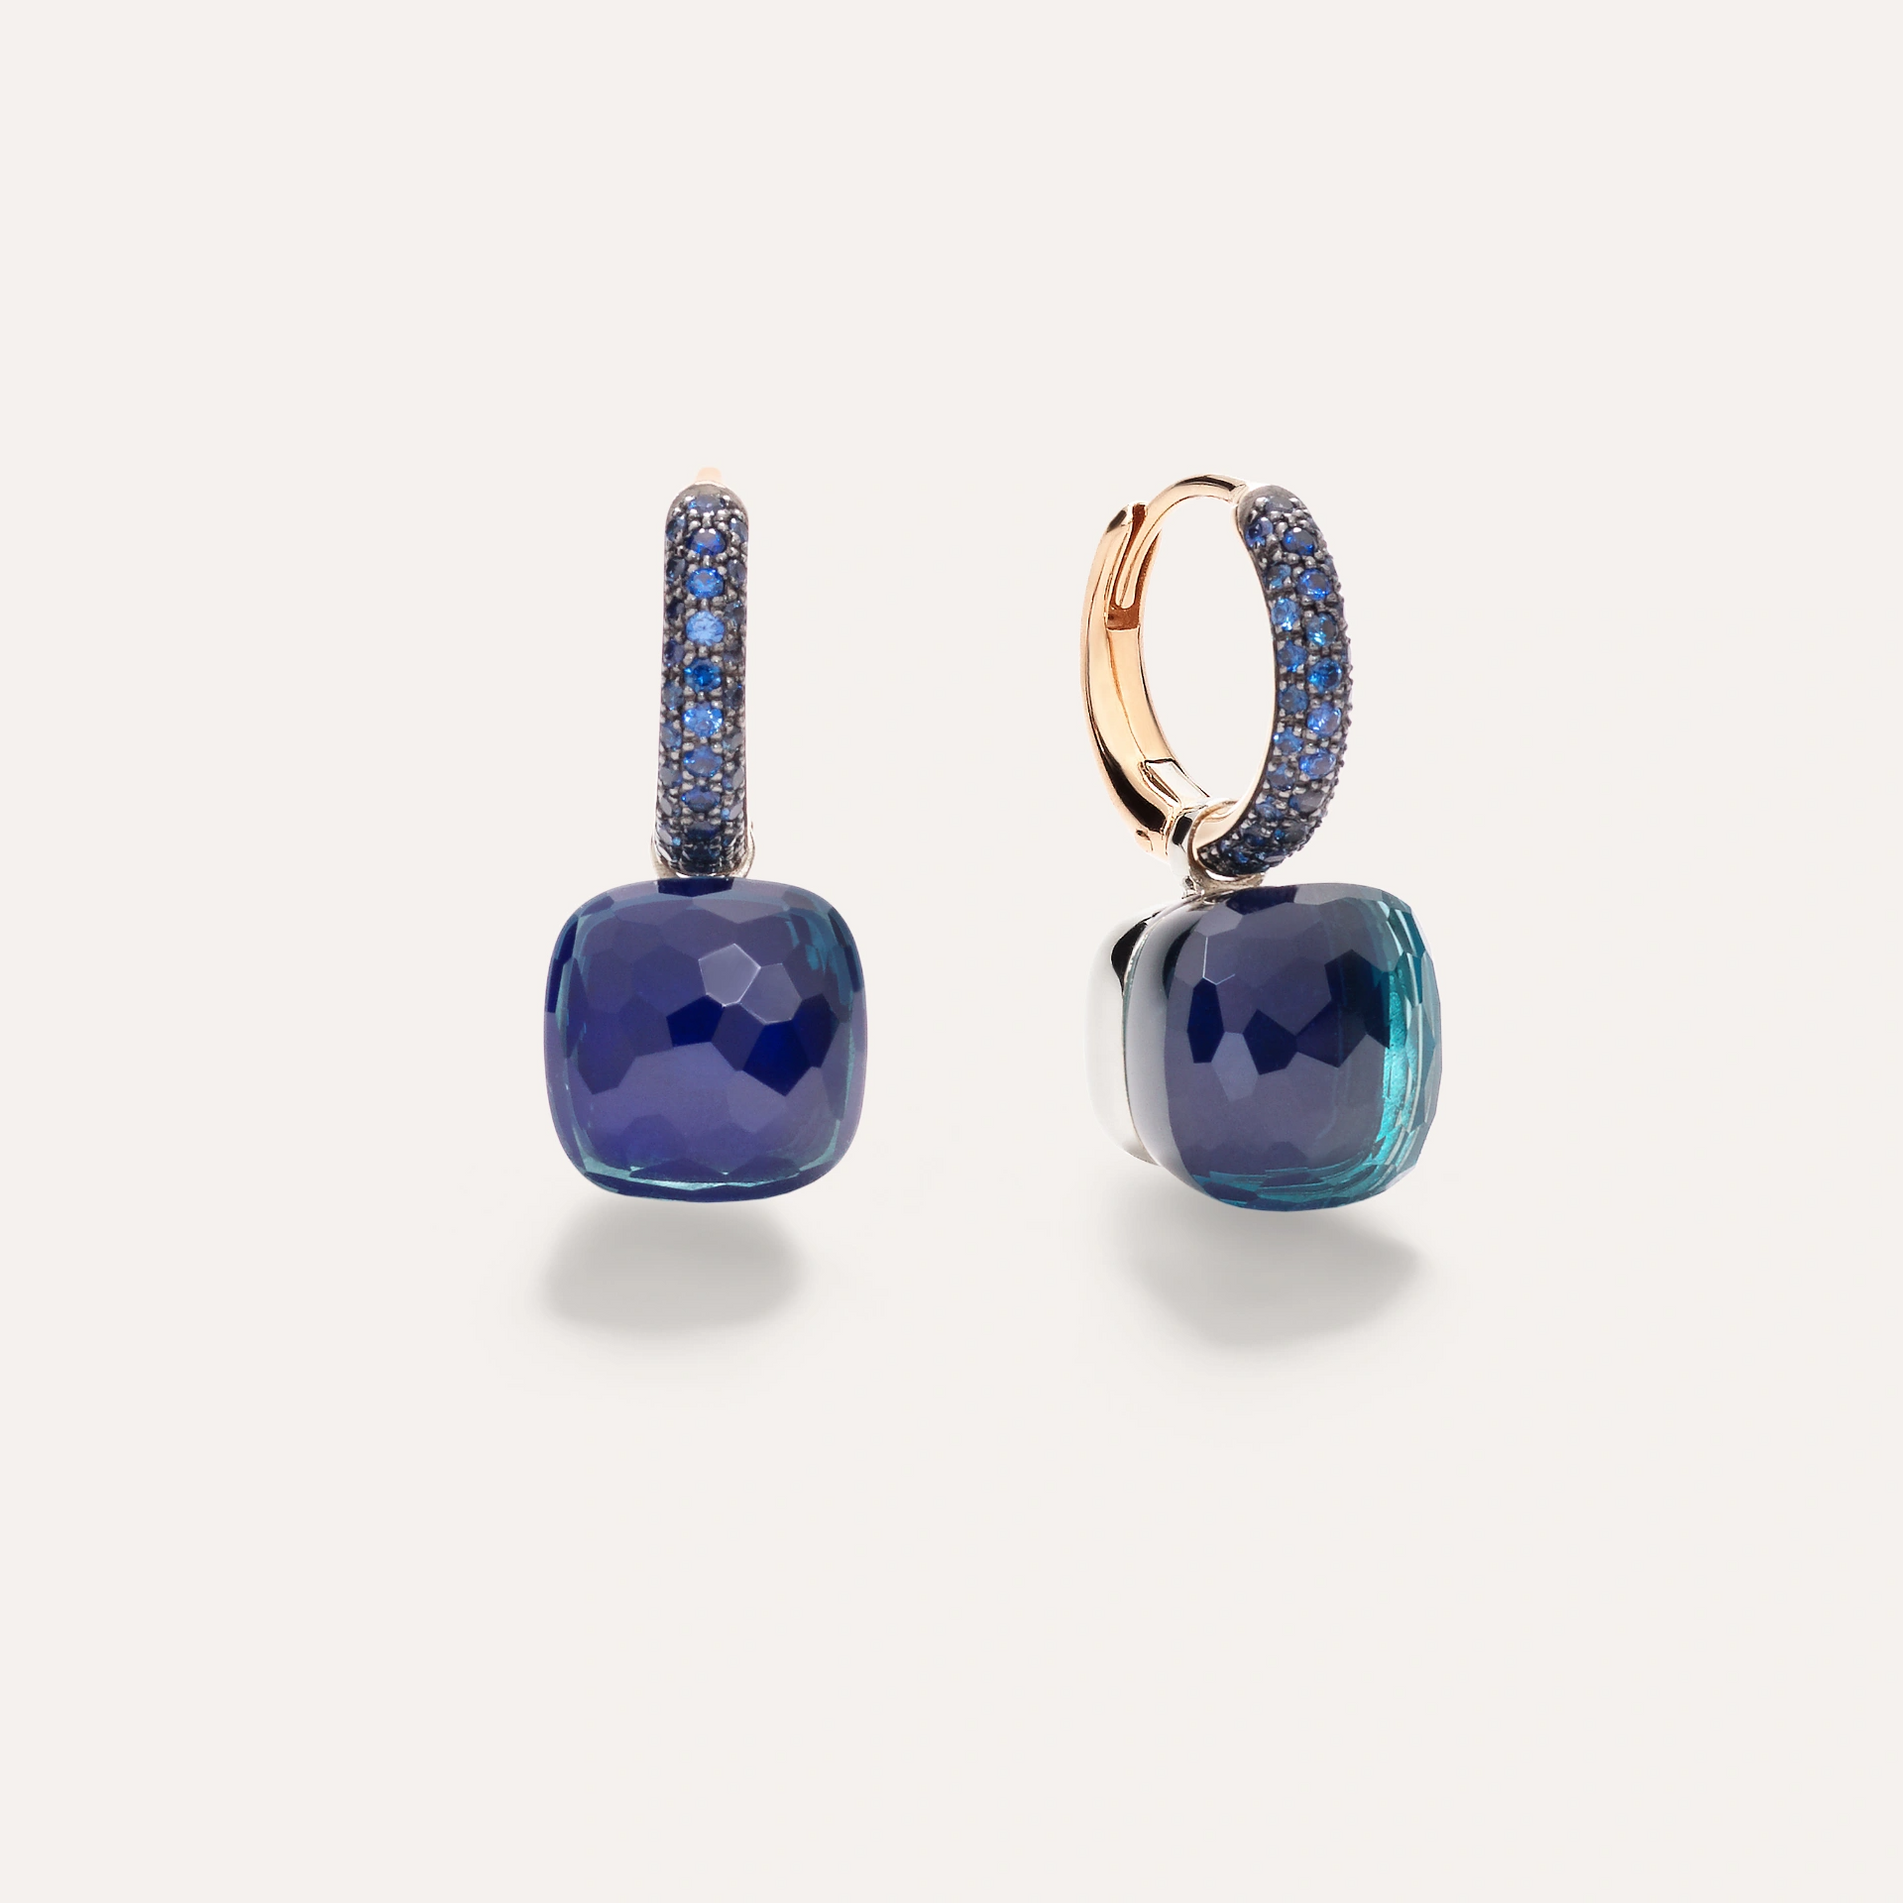 Primary Image Pomellato_earrings-nudo-classic-rose-gold-18kt-white-gold-18kt-blue-london-topaz-lapis-lazuli-blue-sapphire_1